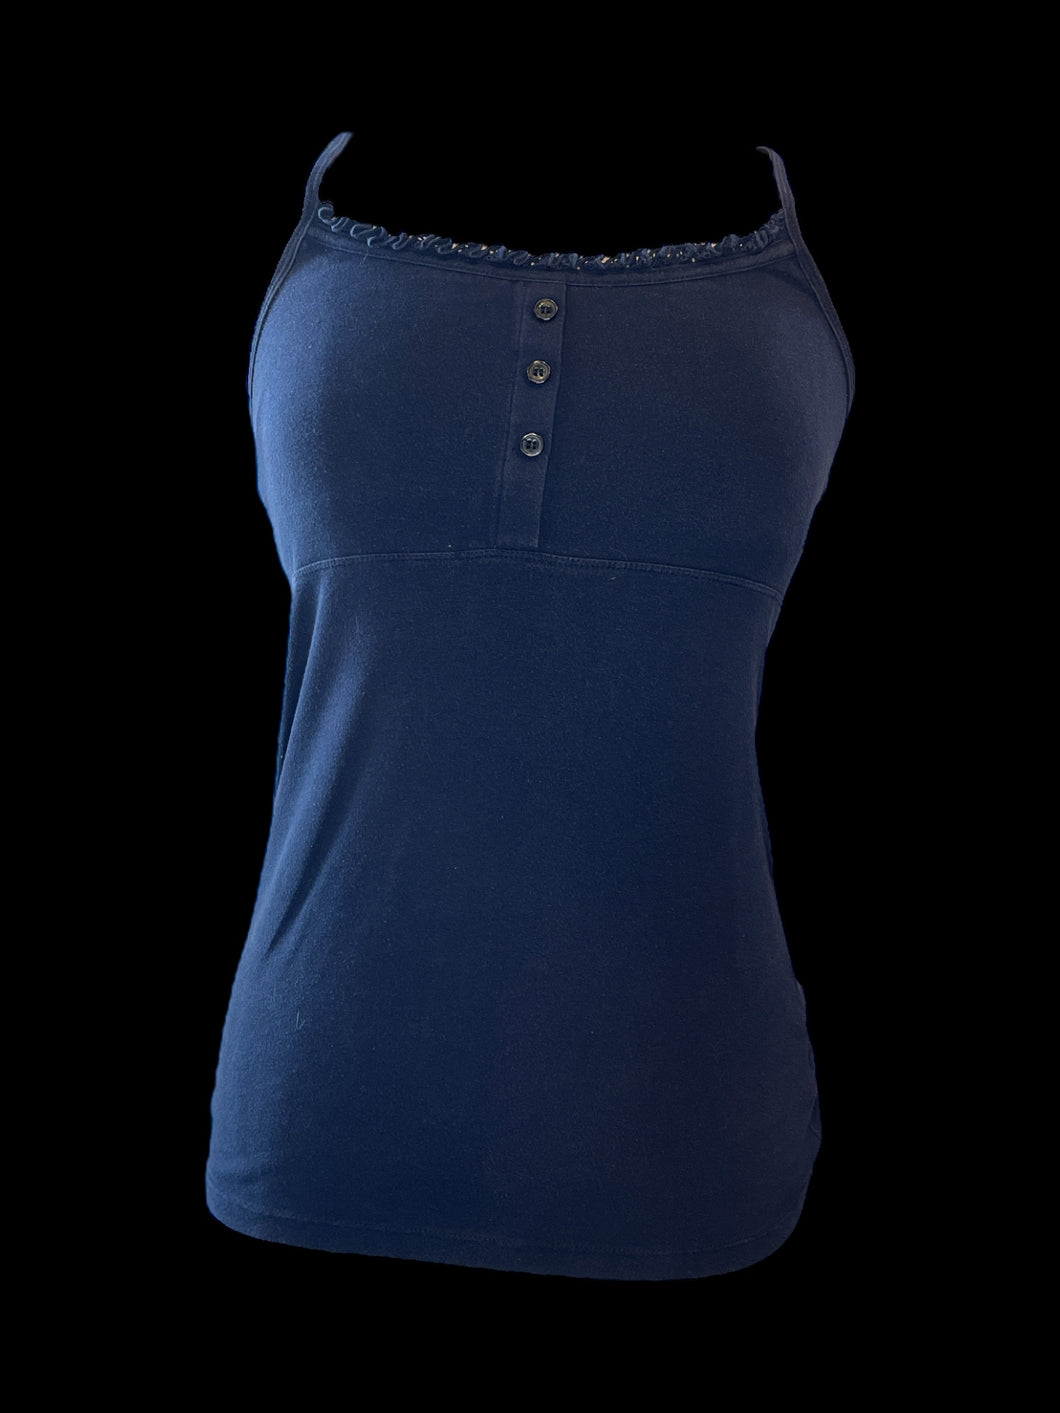 XS Dark blue sleeveless racerback top w/ ruffle neckline, button detail, & built-in shelf bra